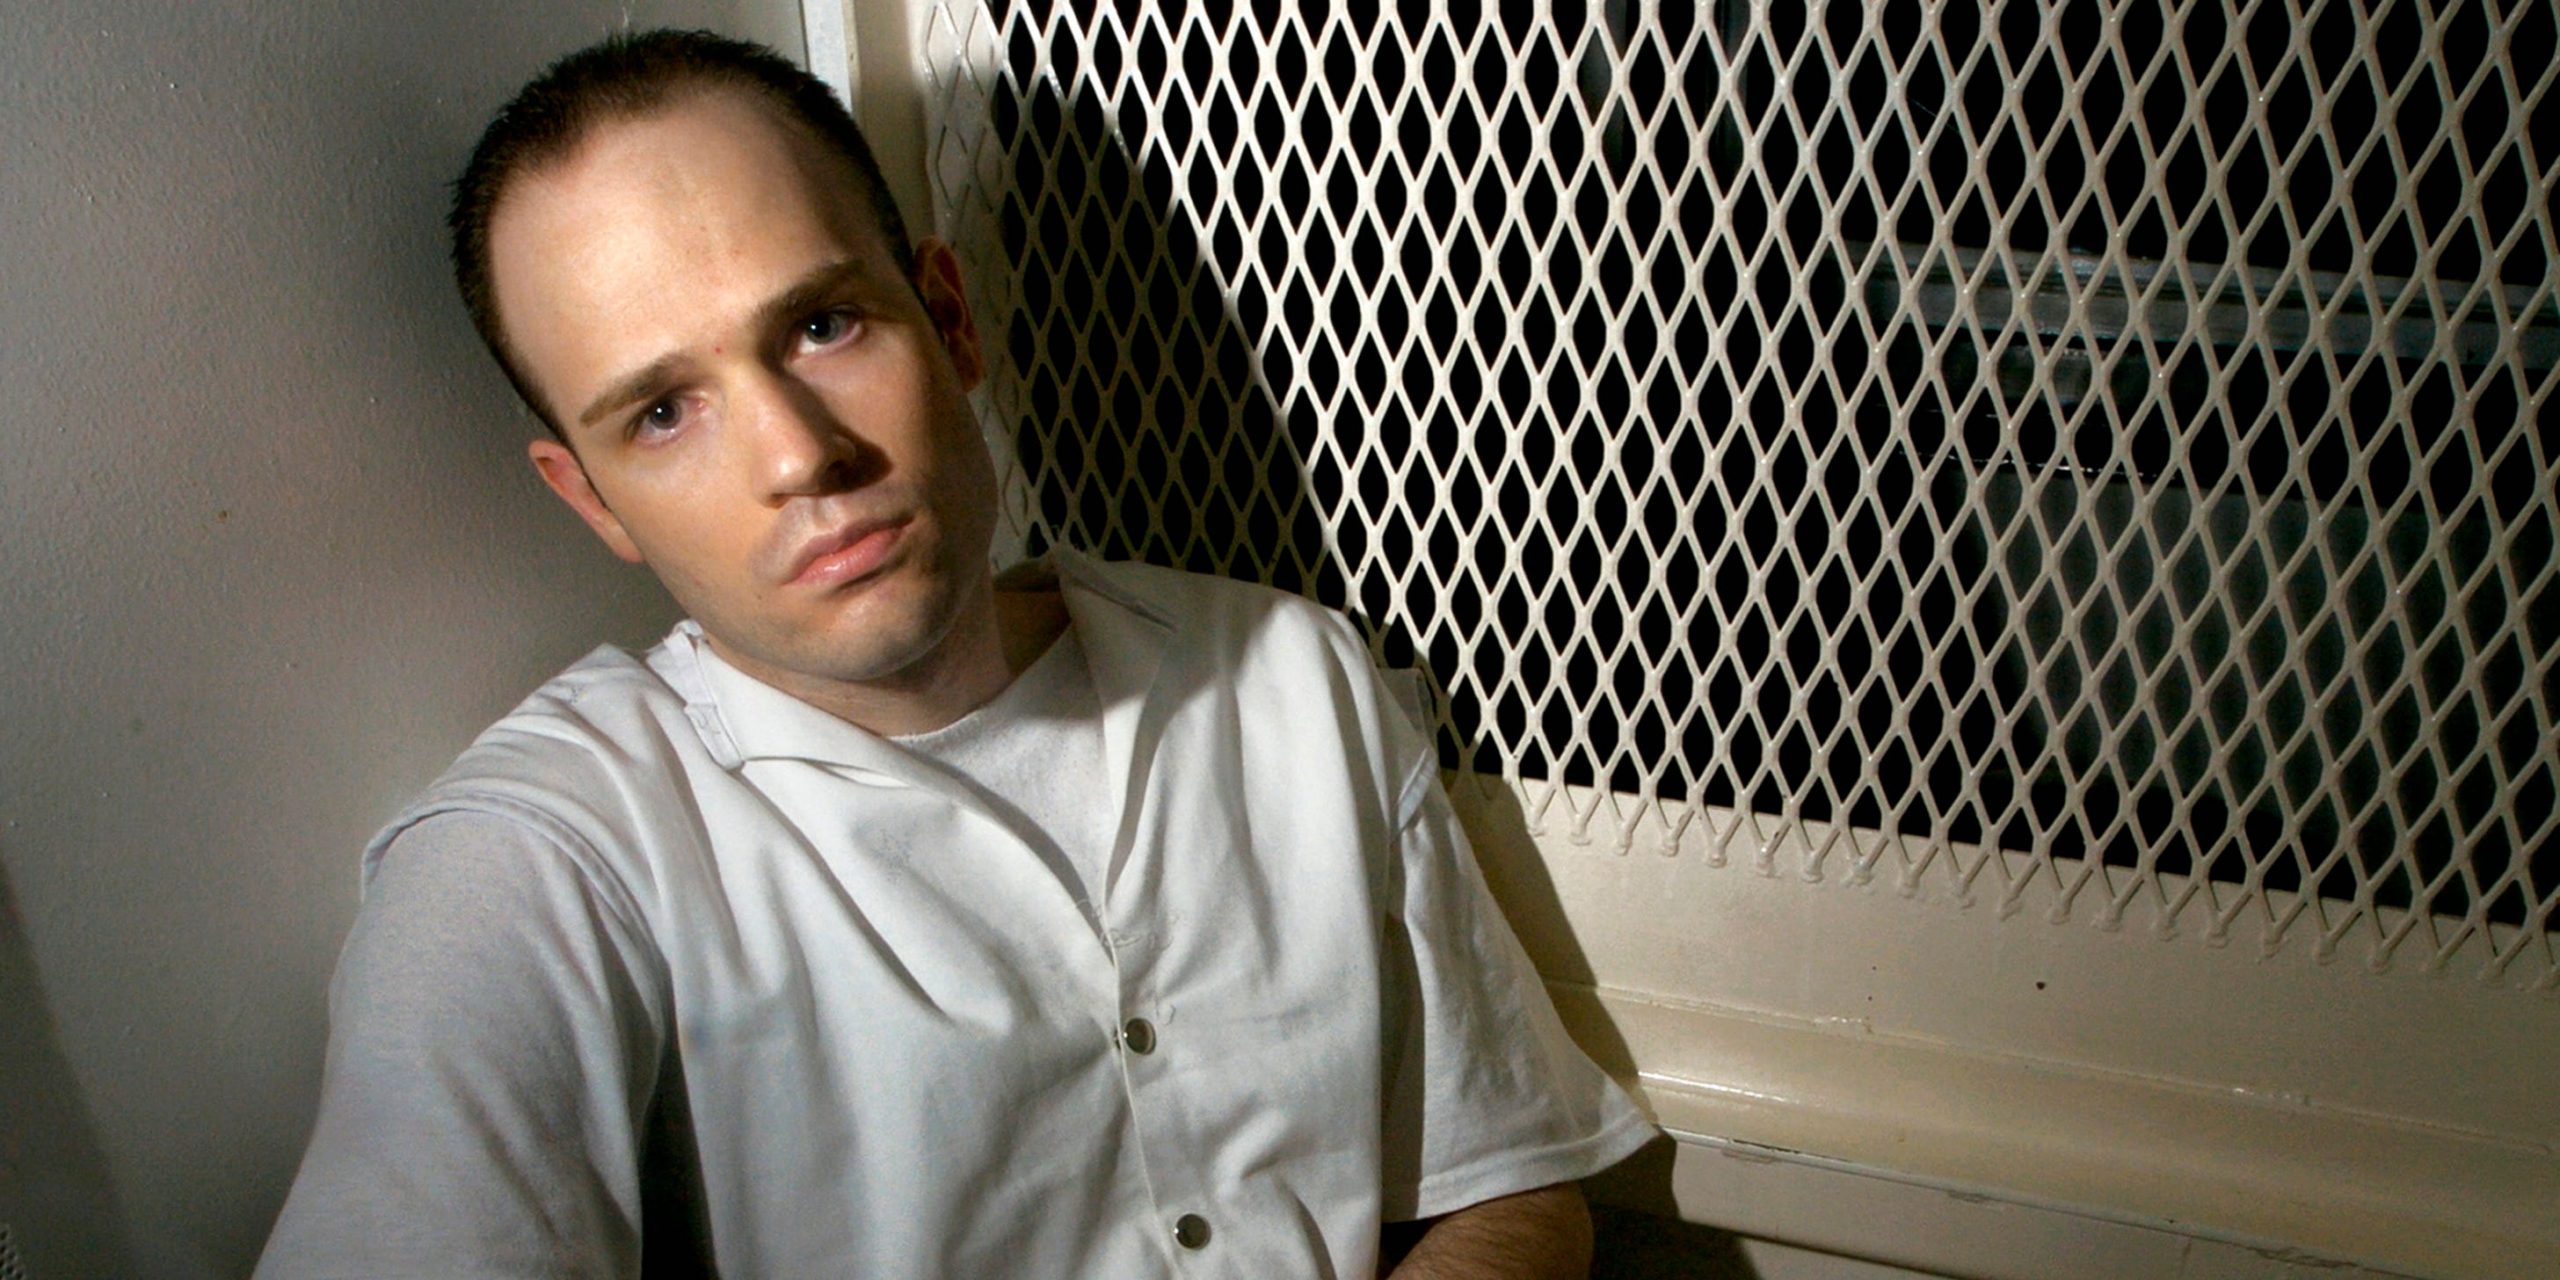 Randy Halprin sits in a visitation cell.